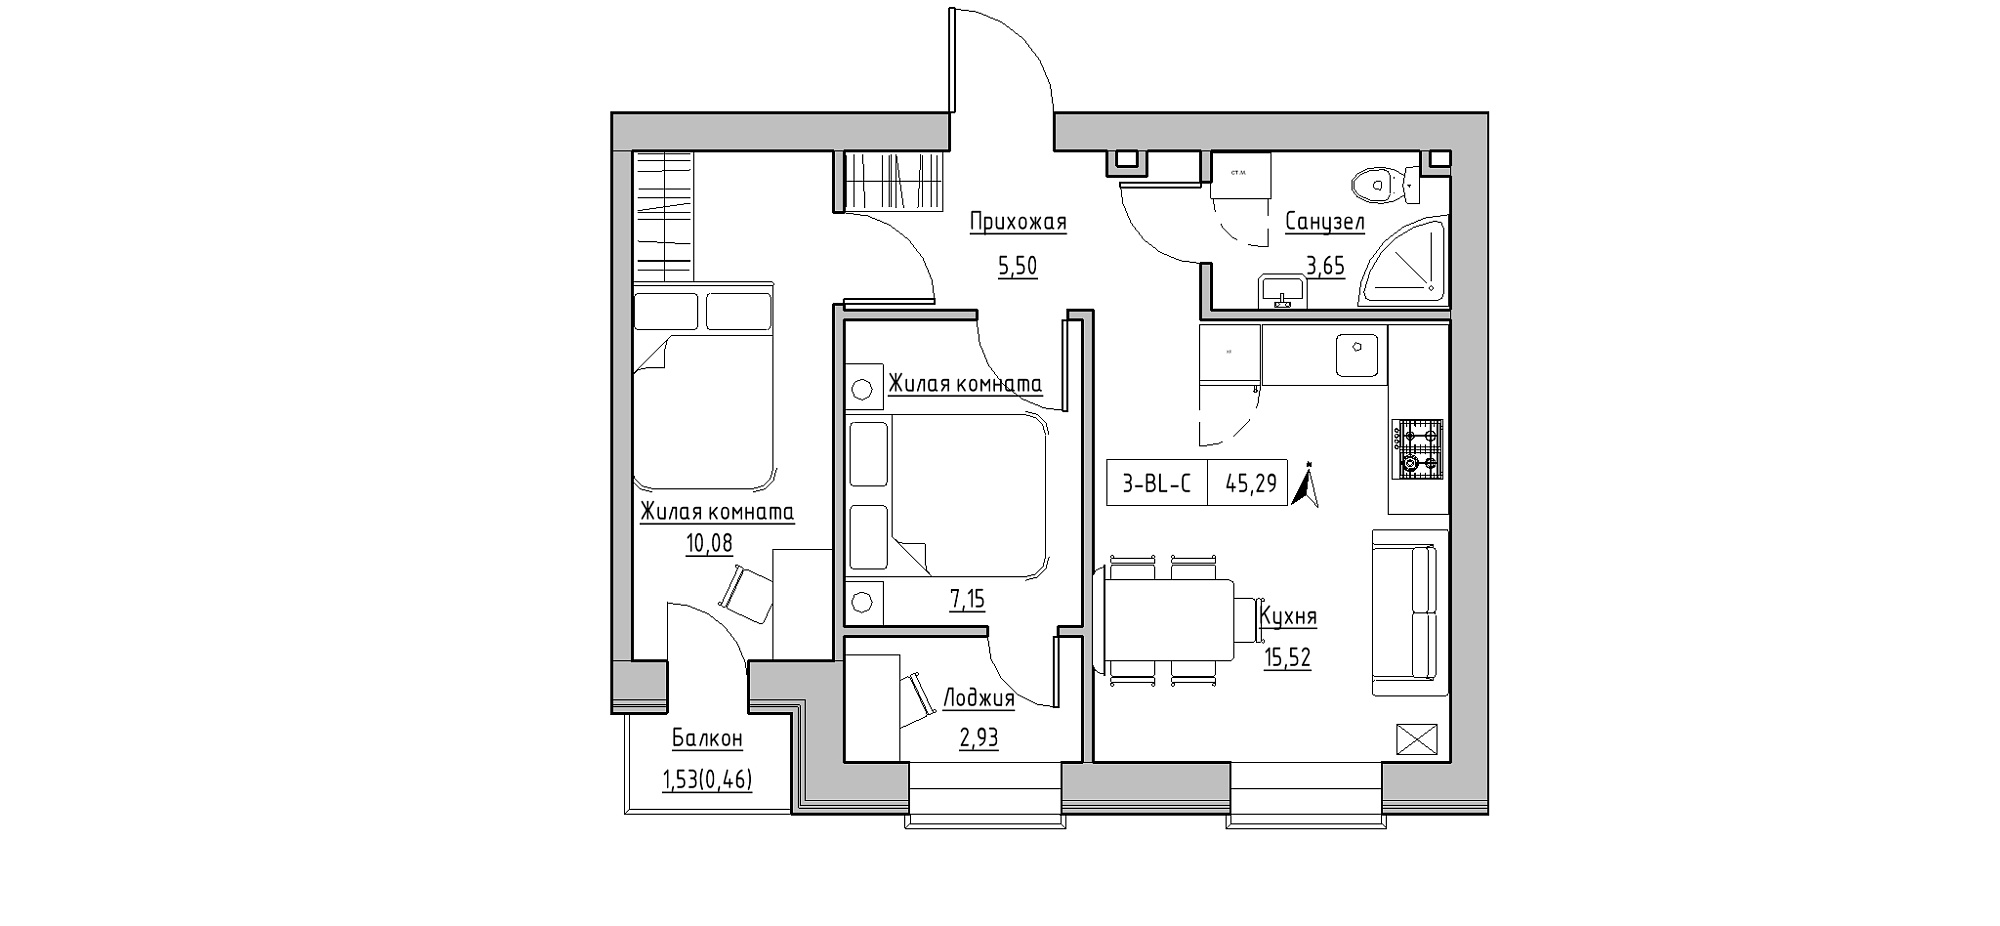 Planning 2-rm flats area 45.29m2, KS-020-04/0008.